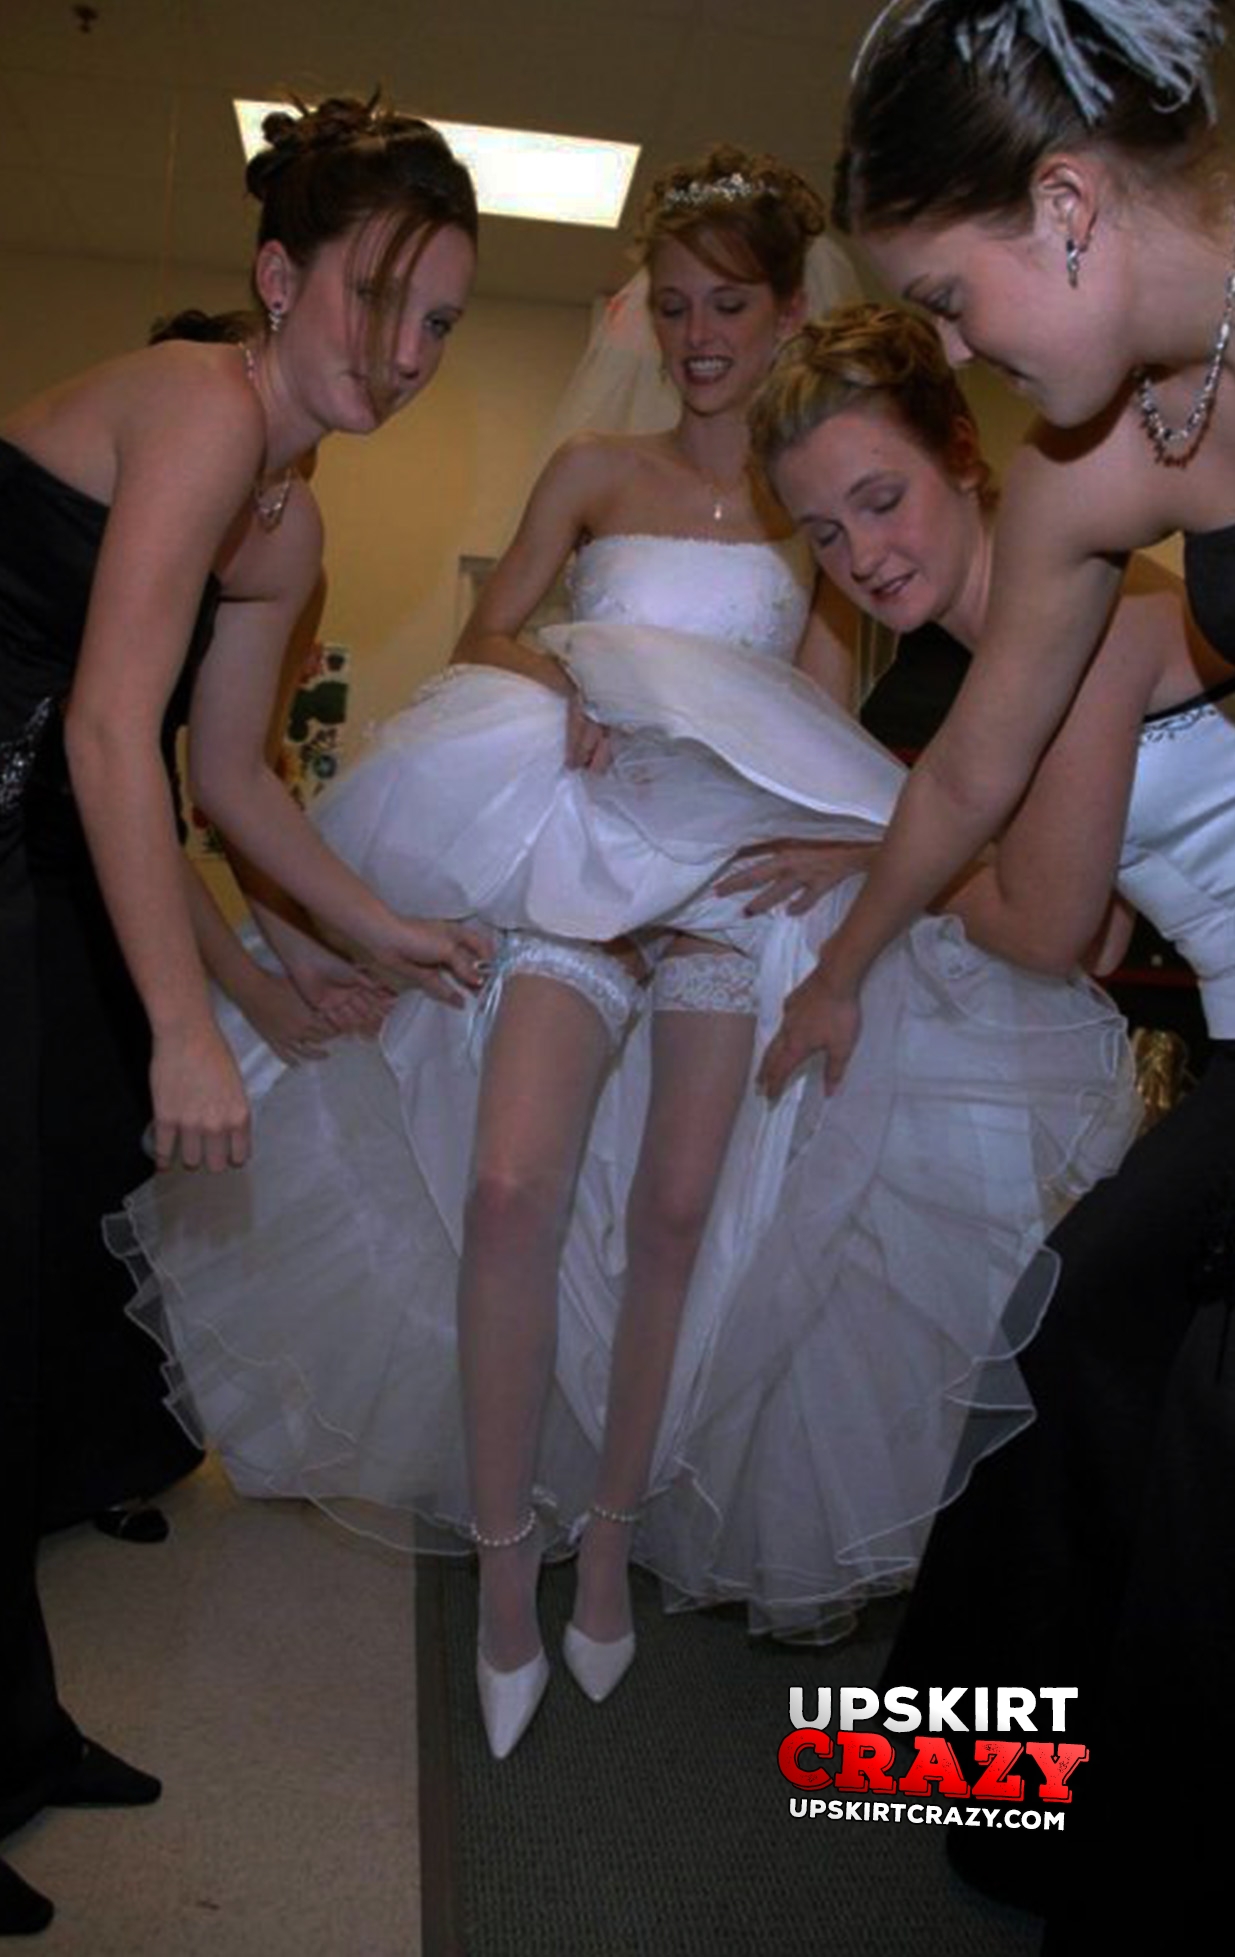 Hot bride's upskirt during wedding day